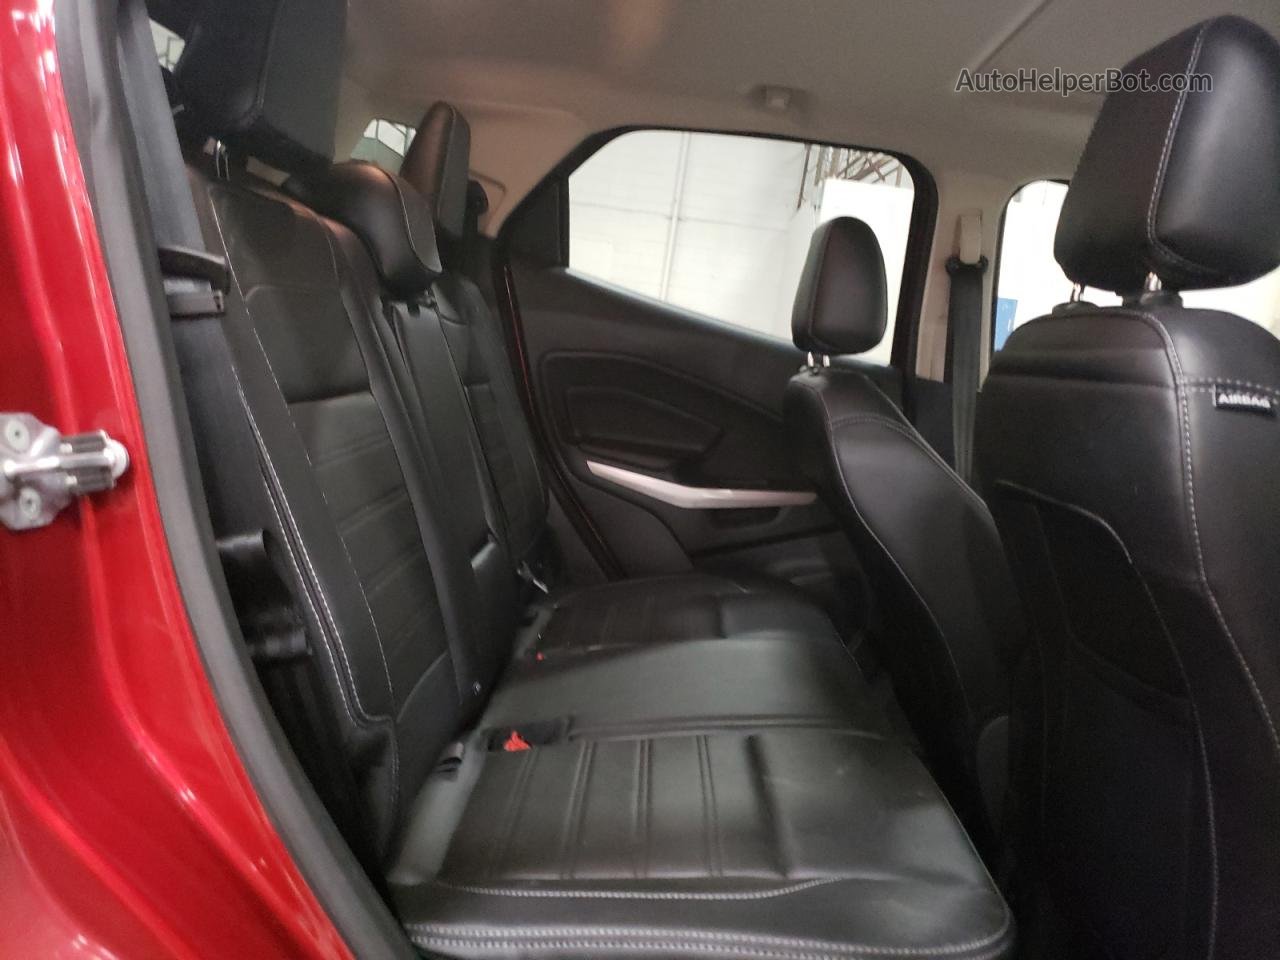 2019 Ford Ecosport Titanium Красный vin: MAJ6S3KLXKC309432